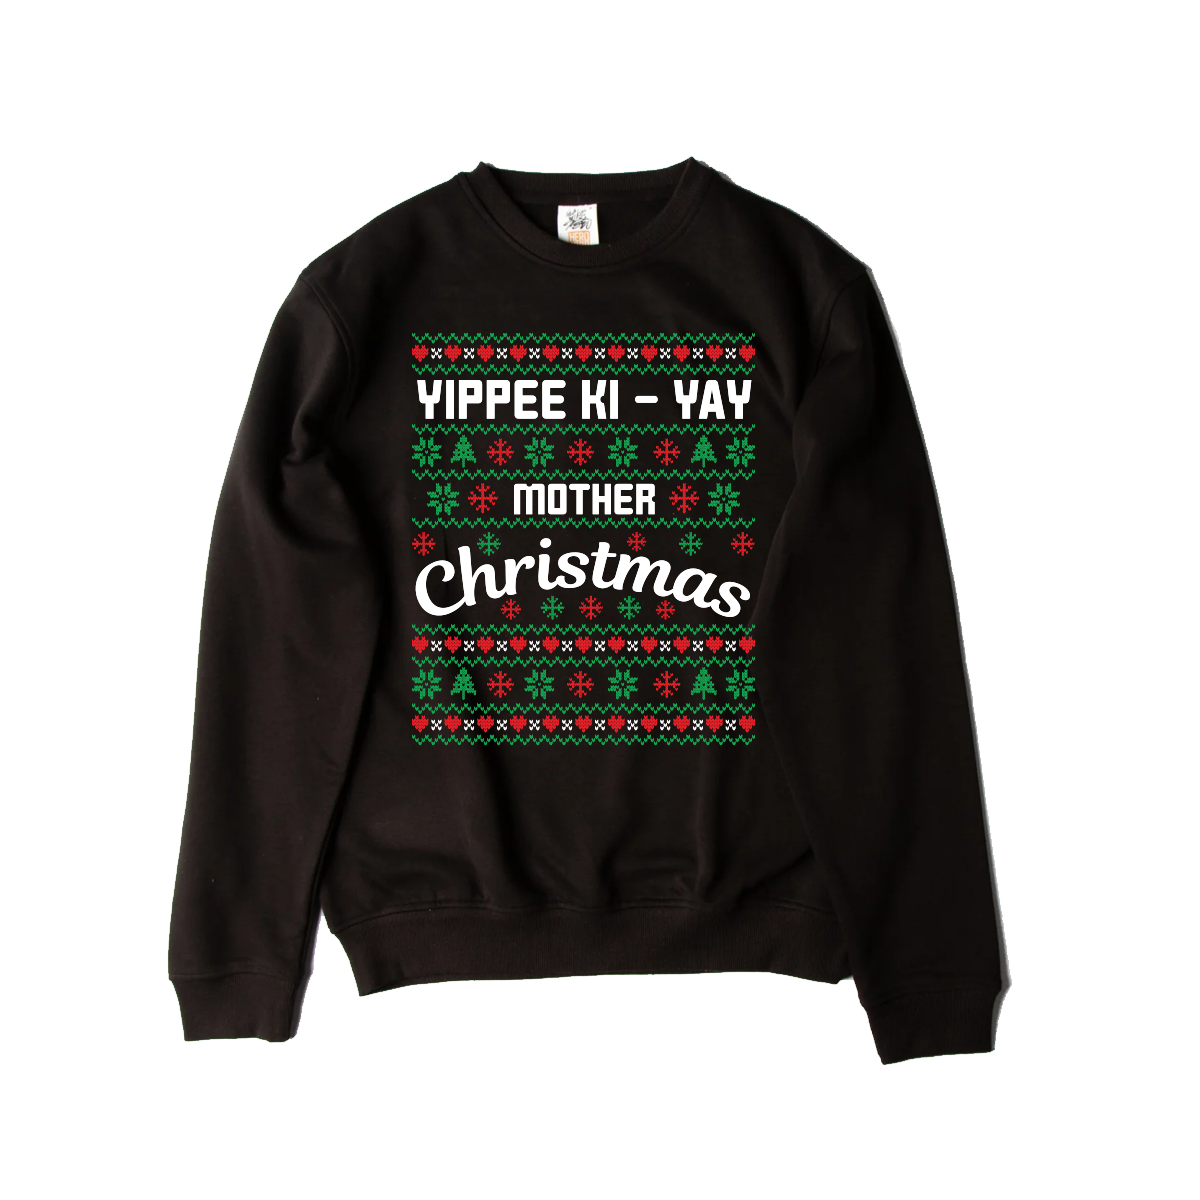 Yipee Kayay Mother Christmas Sweater: HERO Series Midweight Hoodie